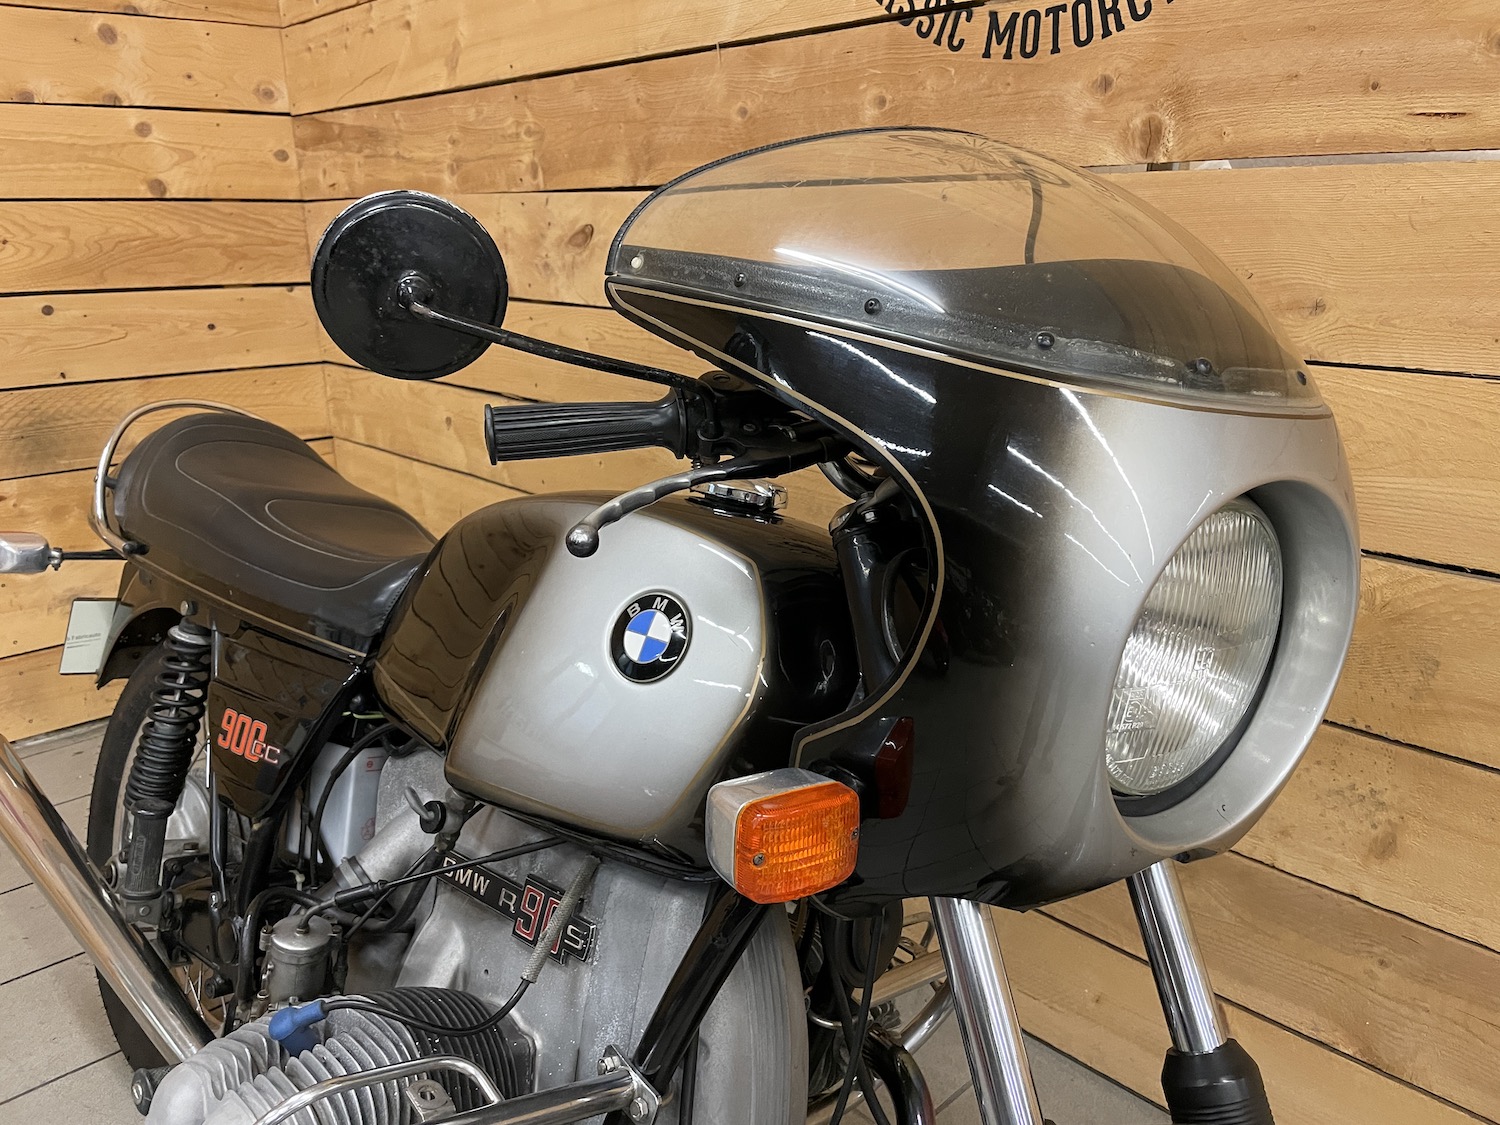 BMW_R90s_74_cezanne_classic_motorcycle_1_111-127.jpg